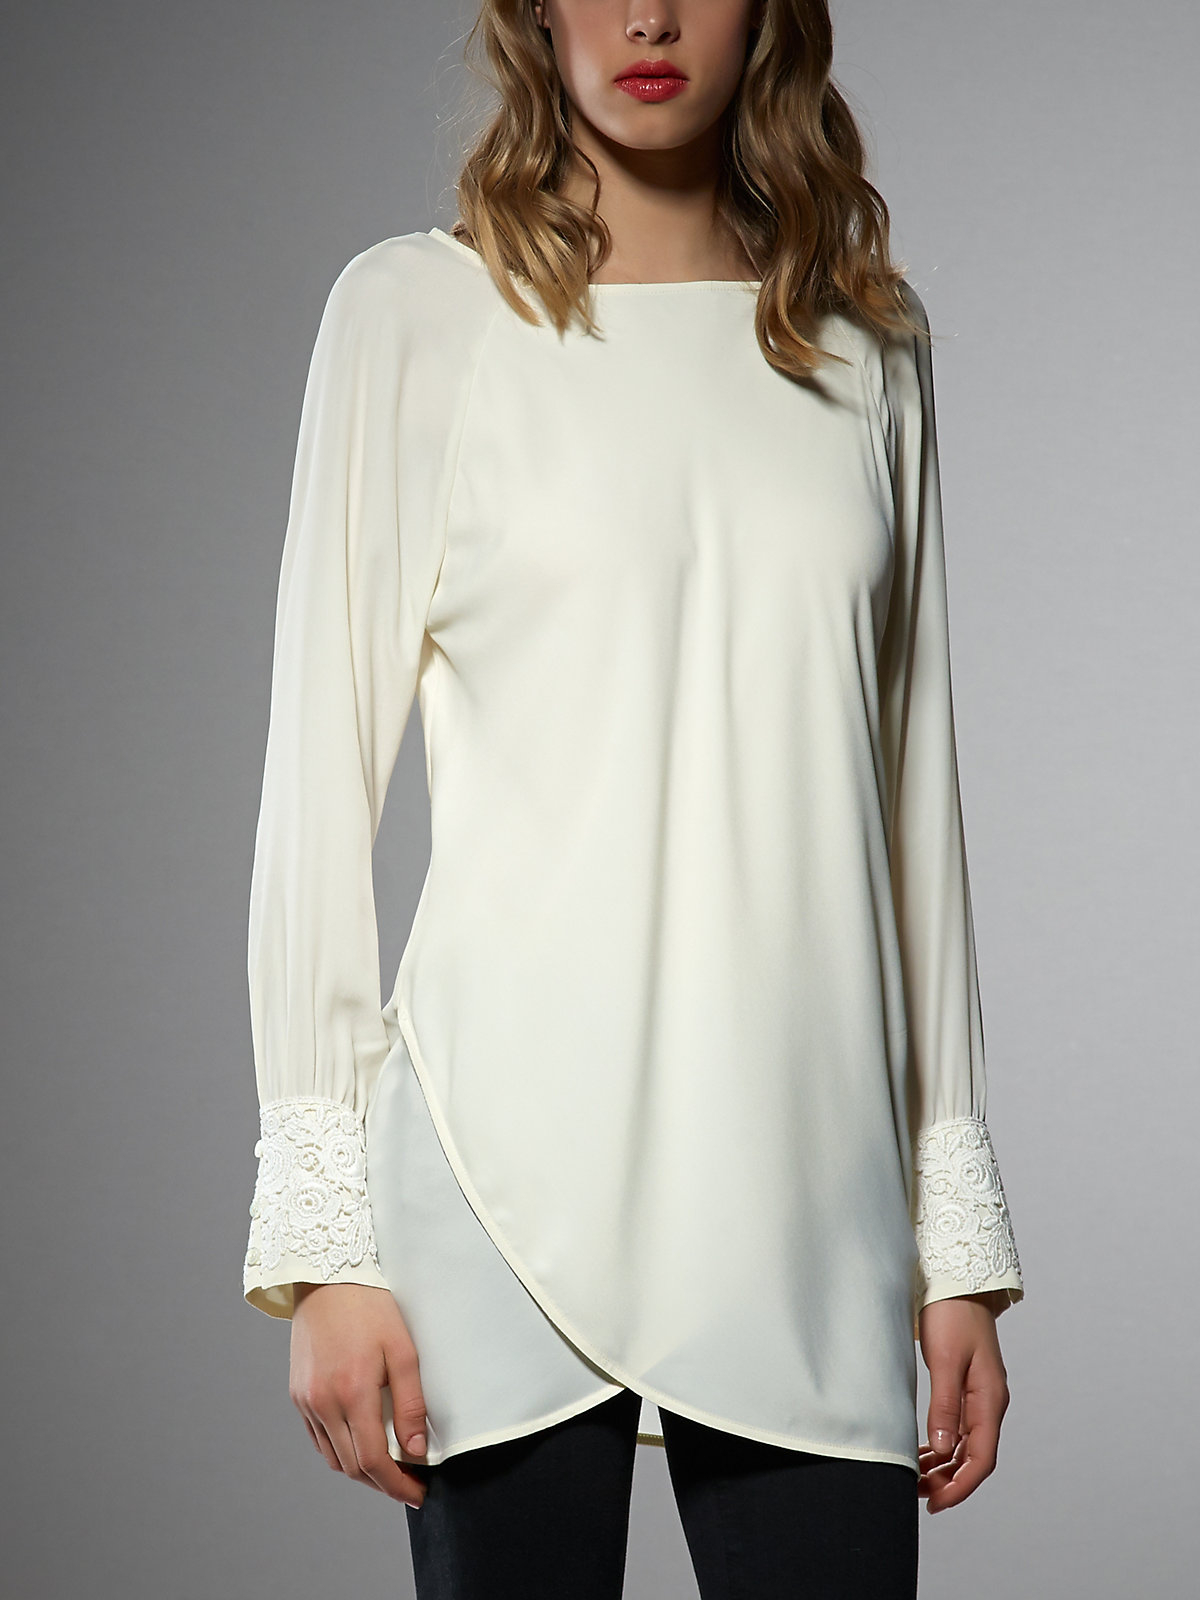 Patrizia pepe Long Sleeve Silk Tunic Top in White | Lyst